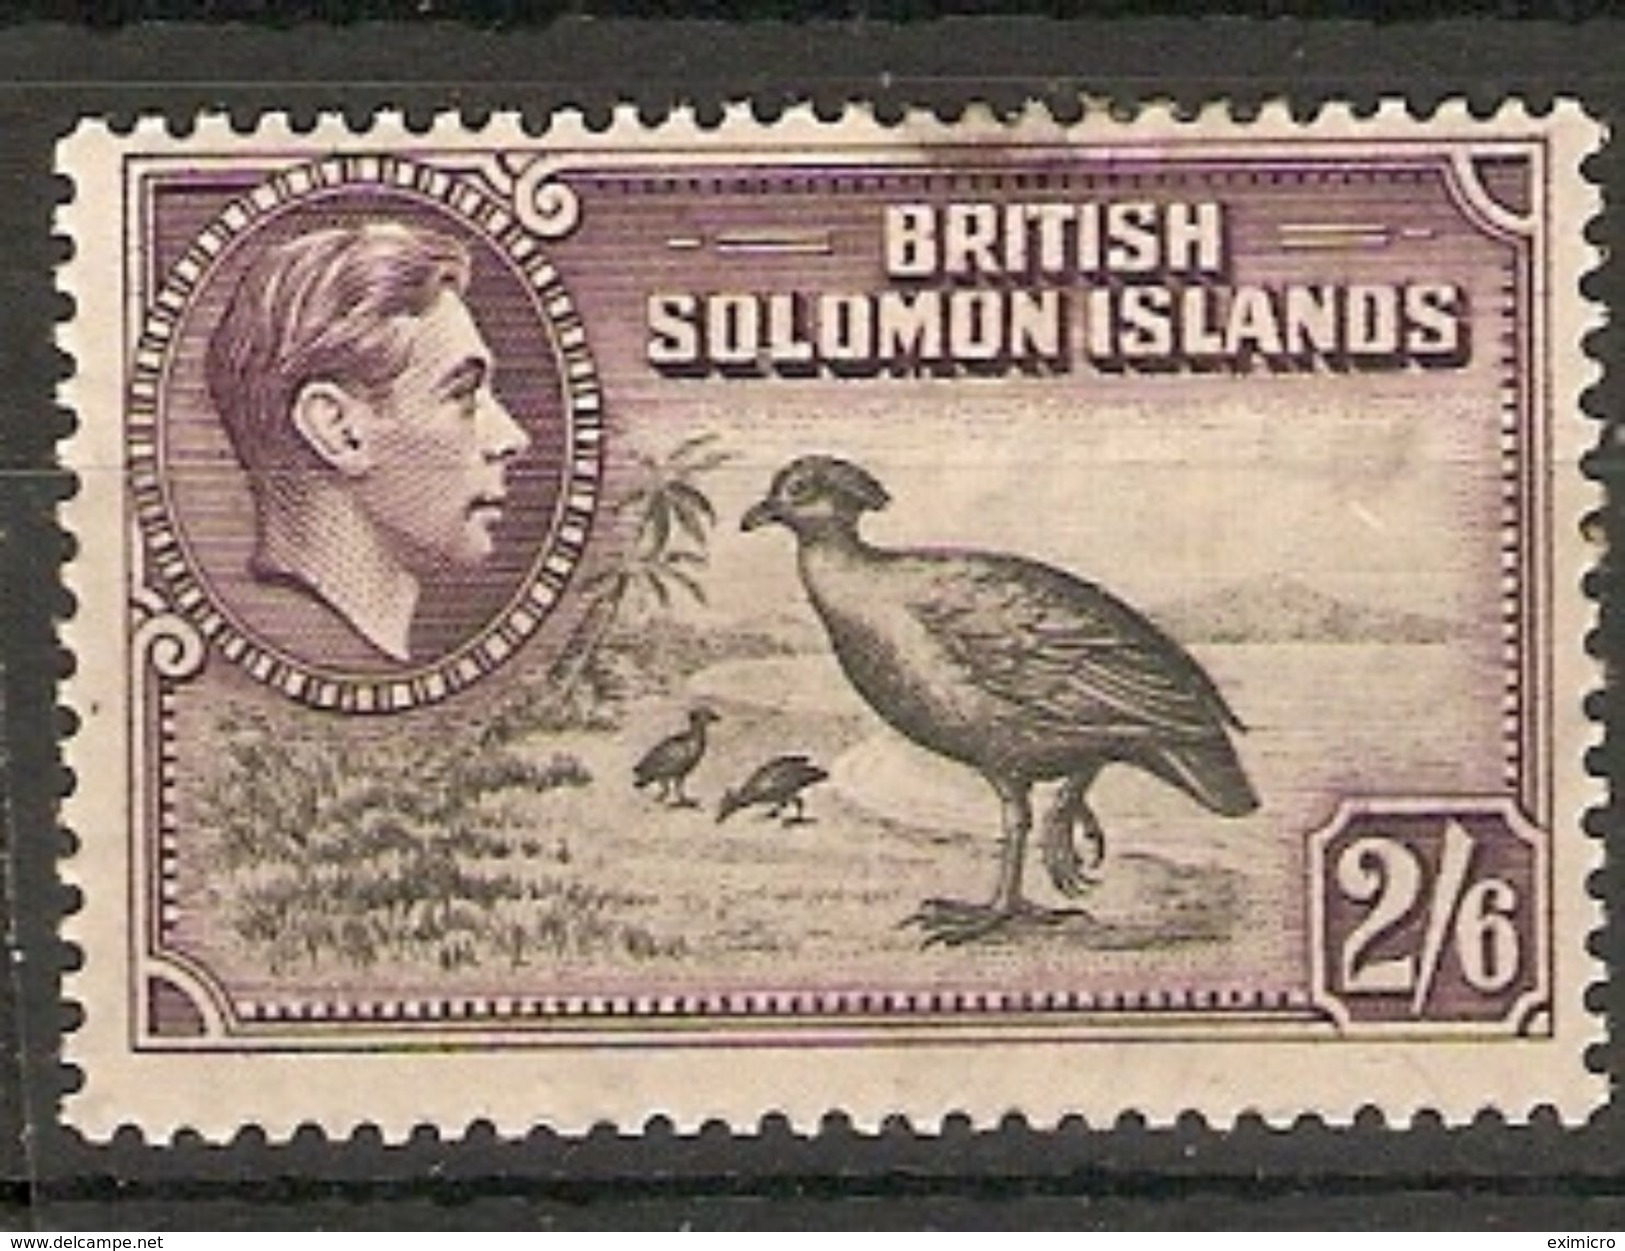 BRITISH SOLOMON ISLANDS 1939 2s 6d SG 70 MOUNTED MINT Cat £32 - British Solomon Islands (...-1978)